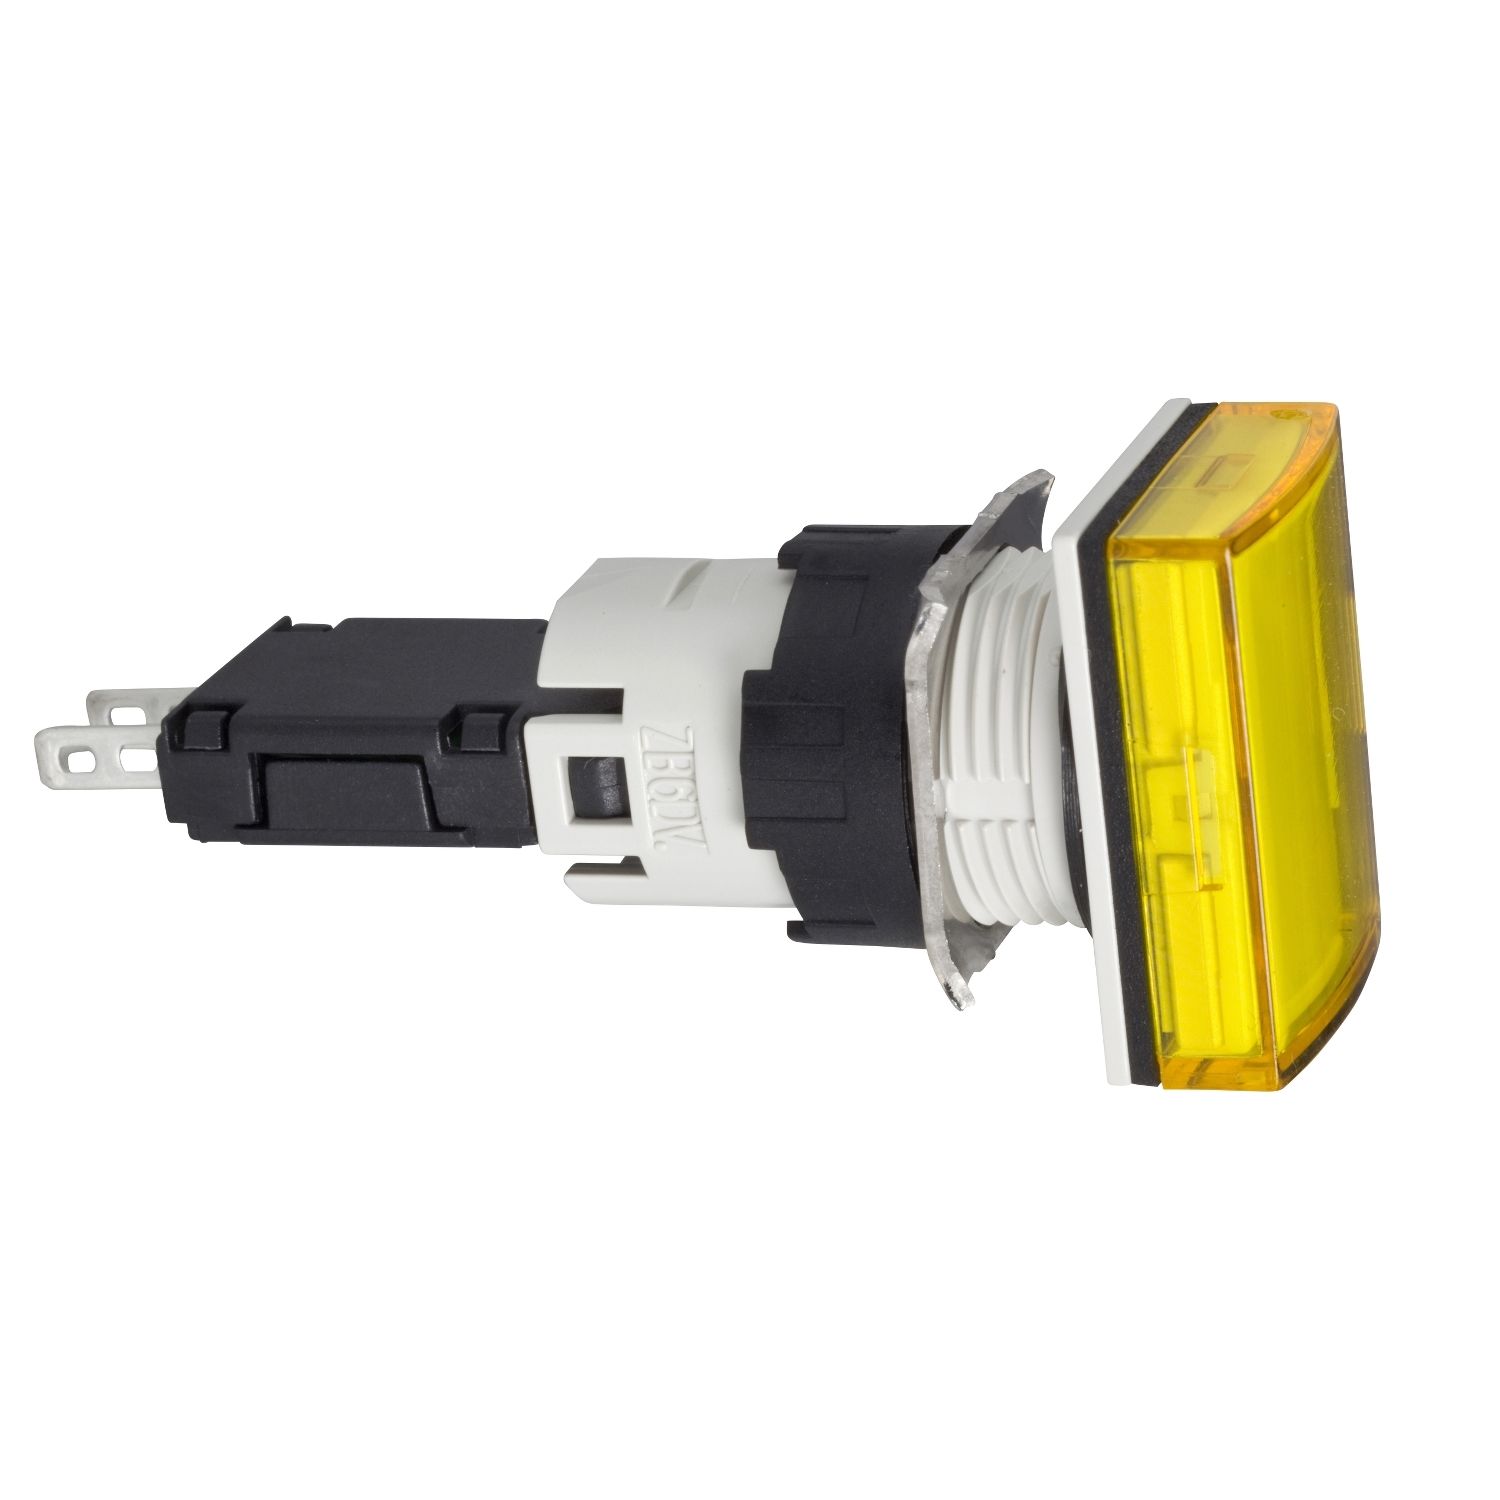 XB6DV5BB Complete pilot light, Harmony XB6, rectangular yellow, plastic, 16mm, integral LED, 12...24V